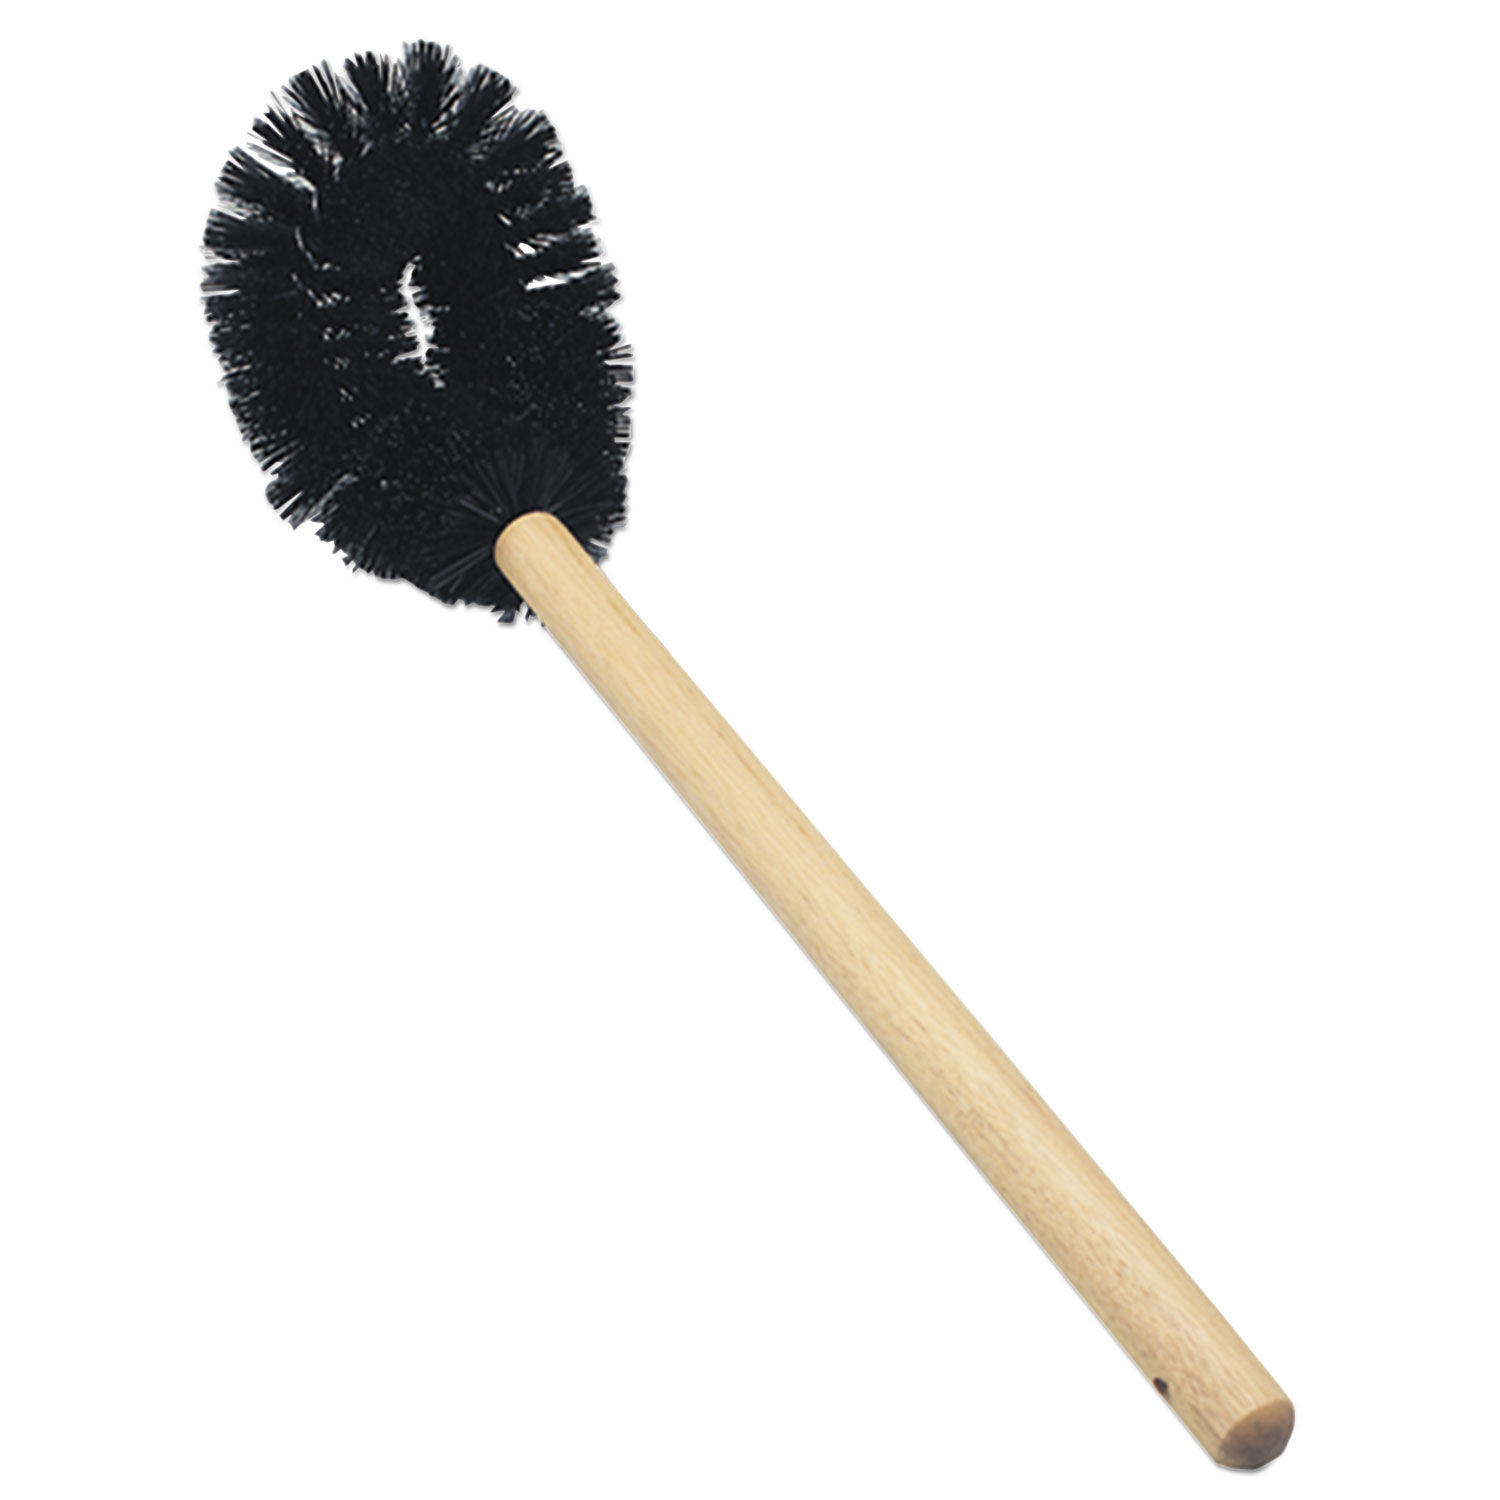 SKILCRAFT Sanitary Brush, 14" Handle, Black, GSA 7920007725800